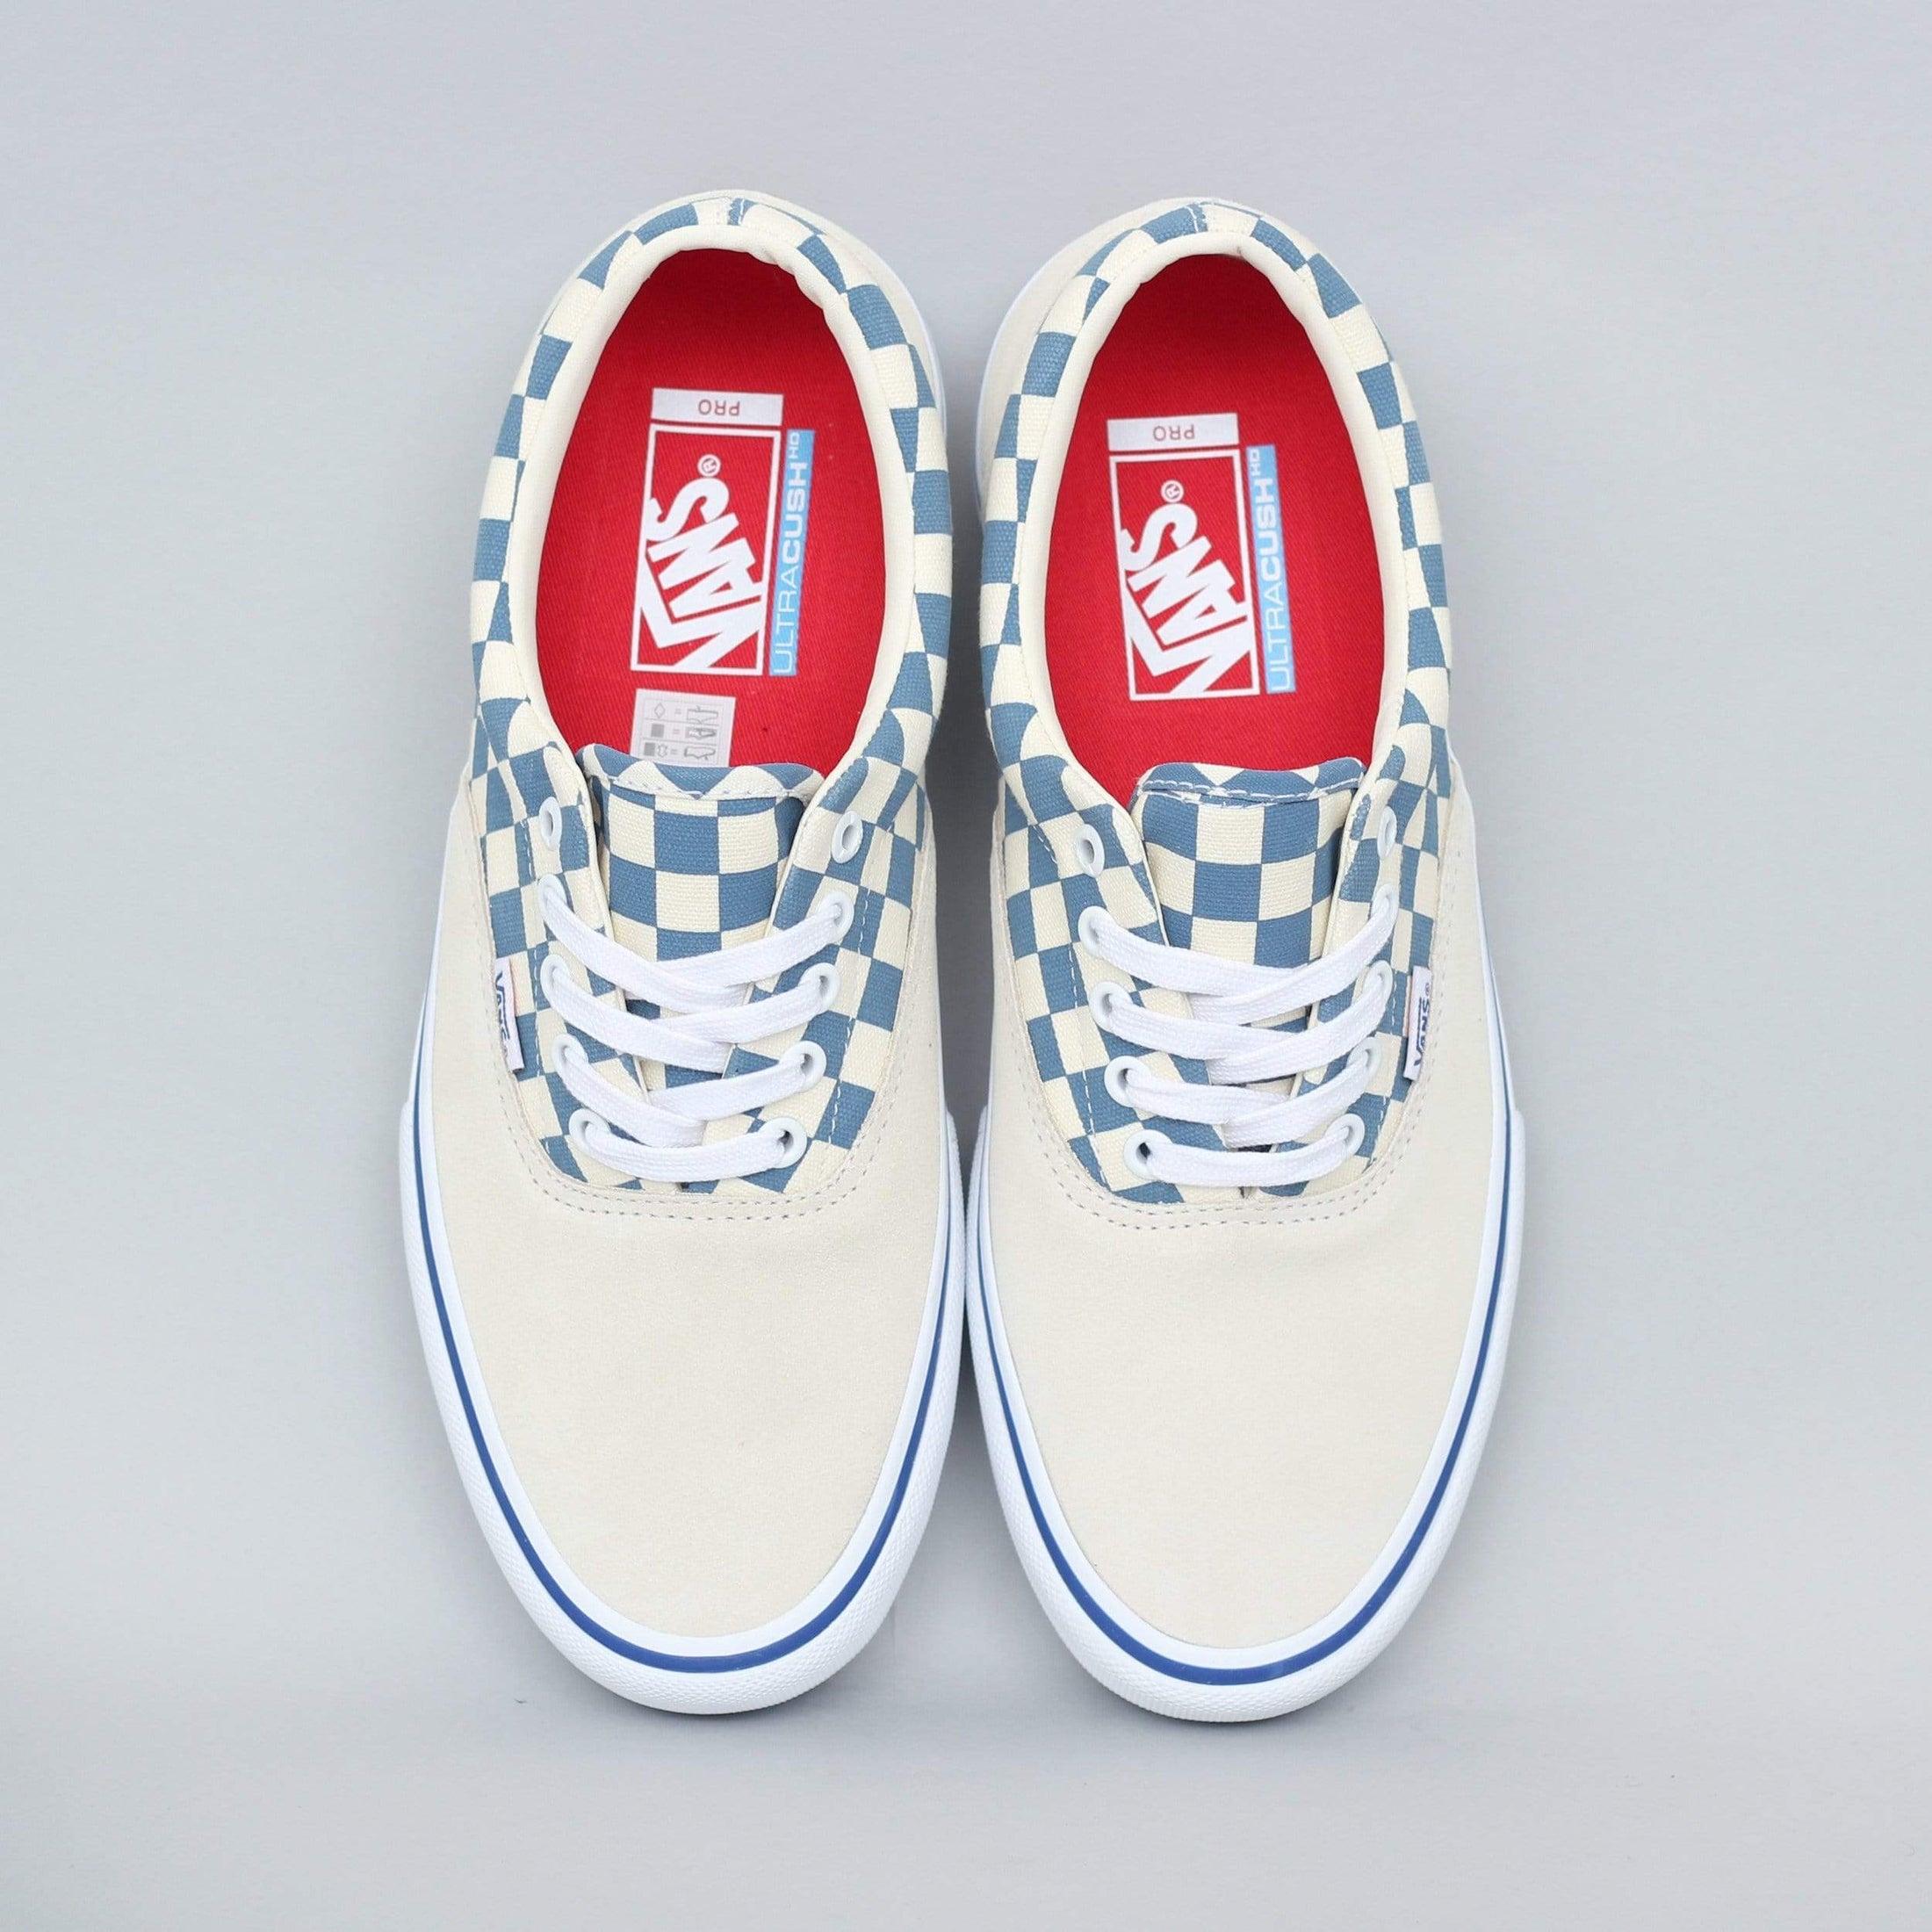 Vans Era Pro Shoes (Checker) Classic White / Blue